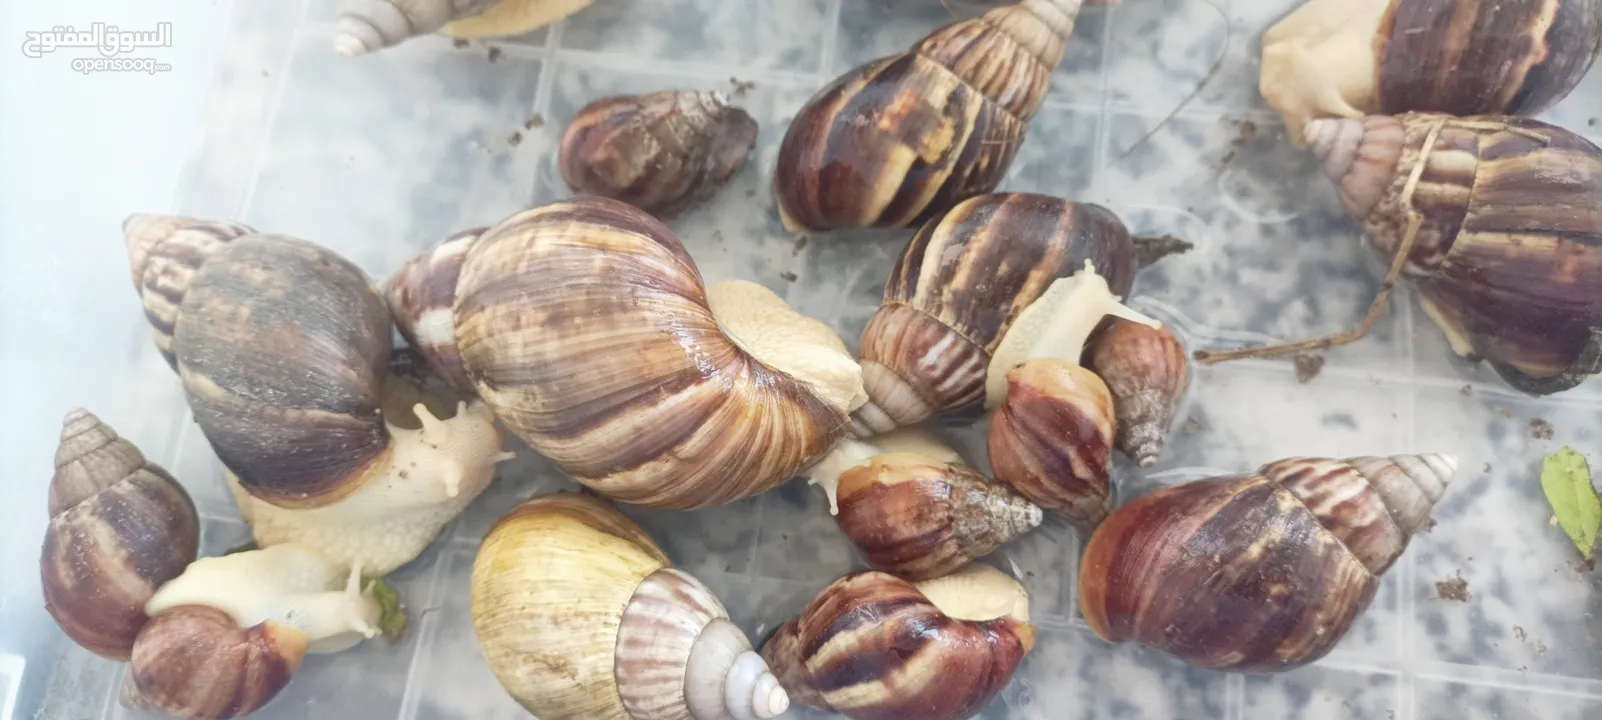 حلزونات افريقيا للبيع African snails for sale